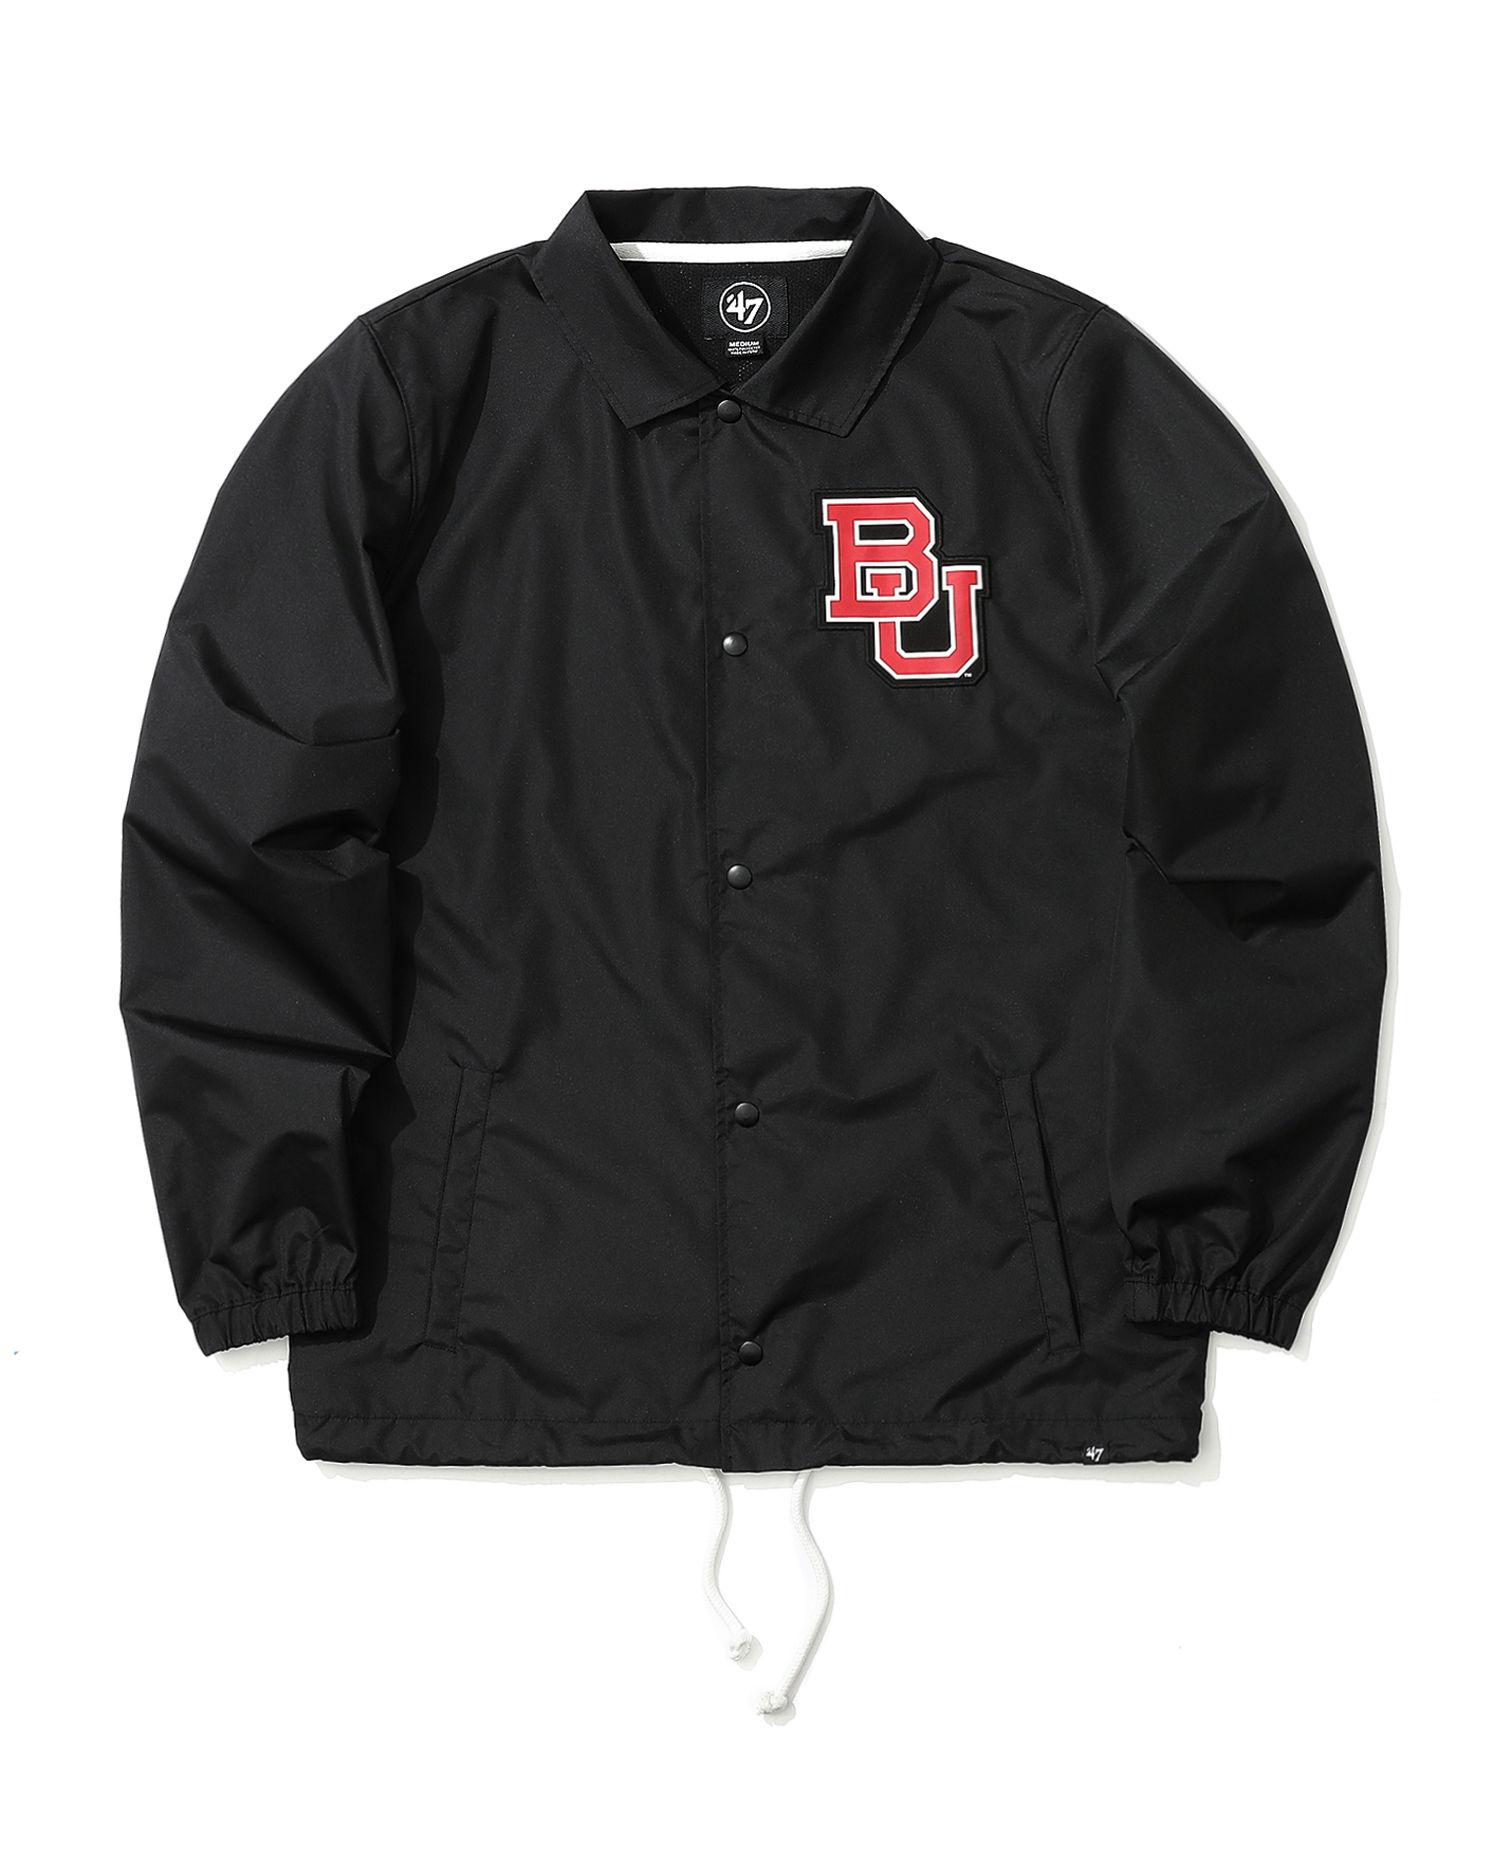 Boston University coach jacket by '47